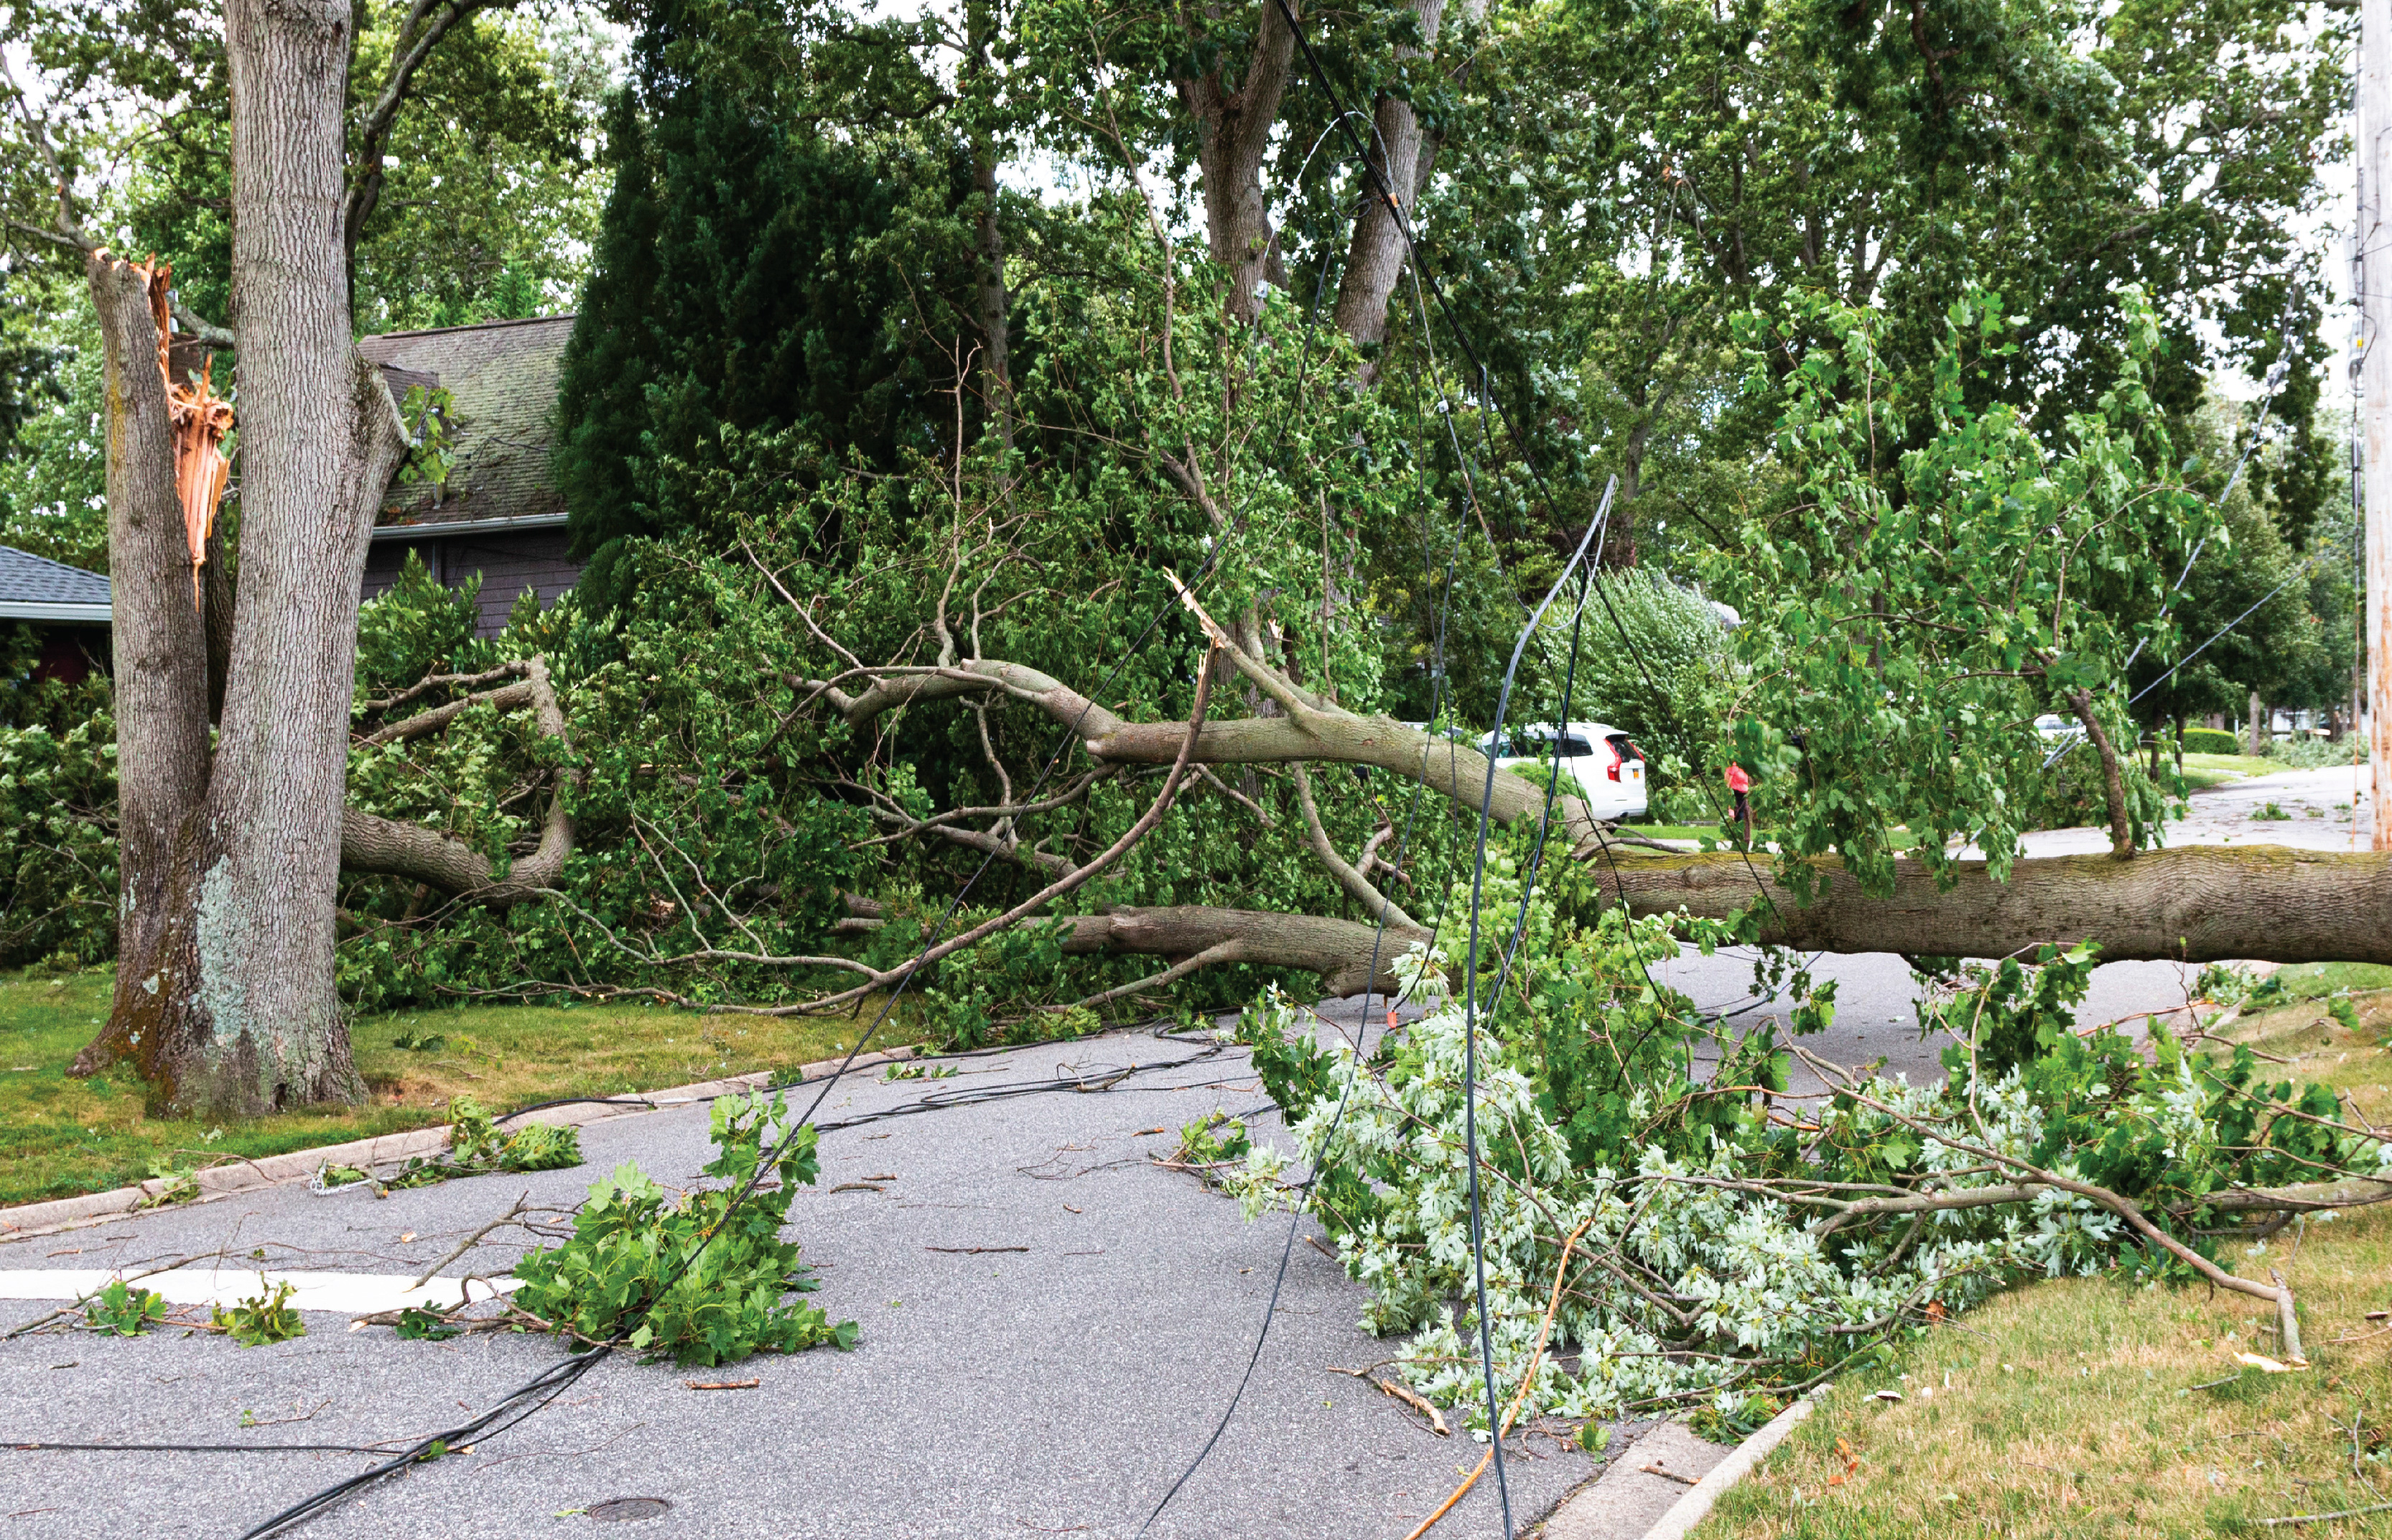 How to Report Storm Damage in Your Neighborhood